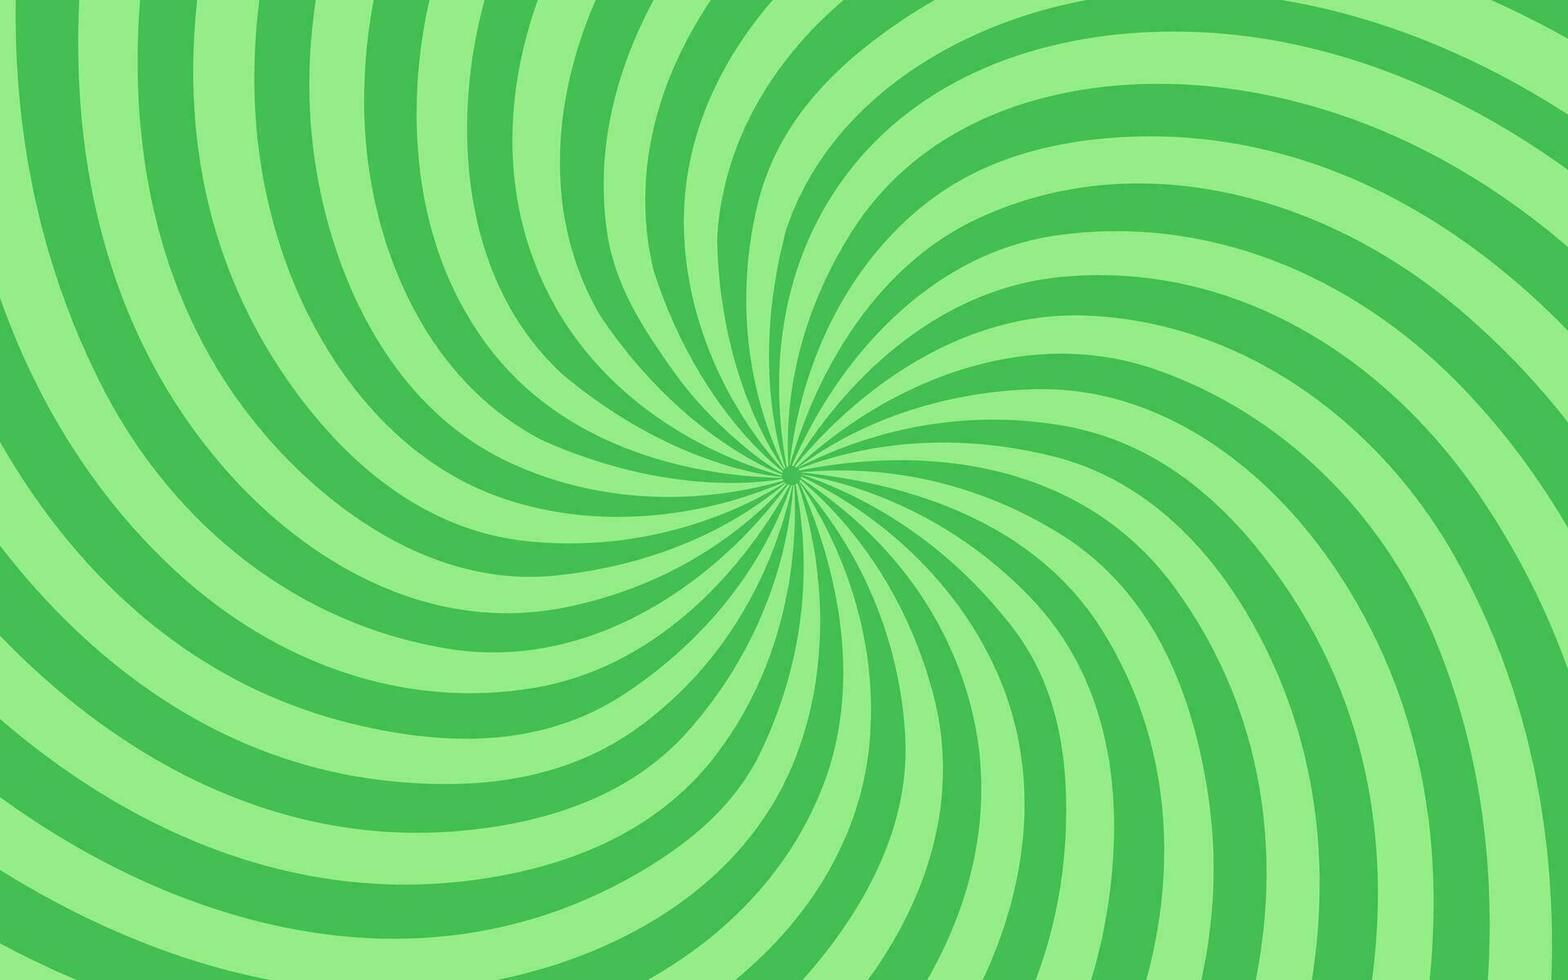 Green starburst or sunburst background in a spiral or swirled radial striped design vector